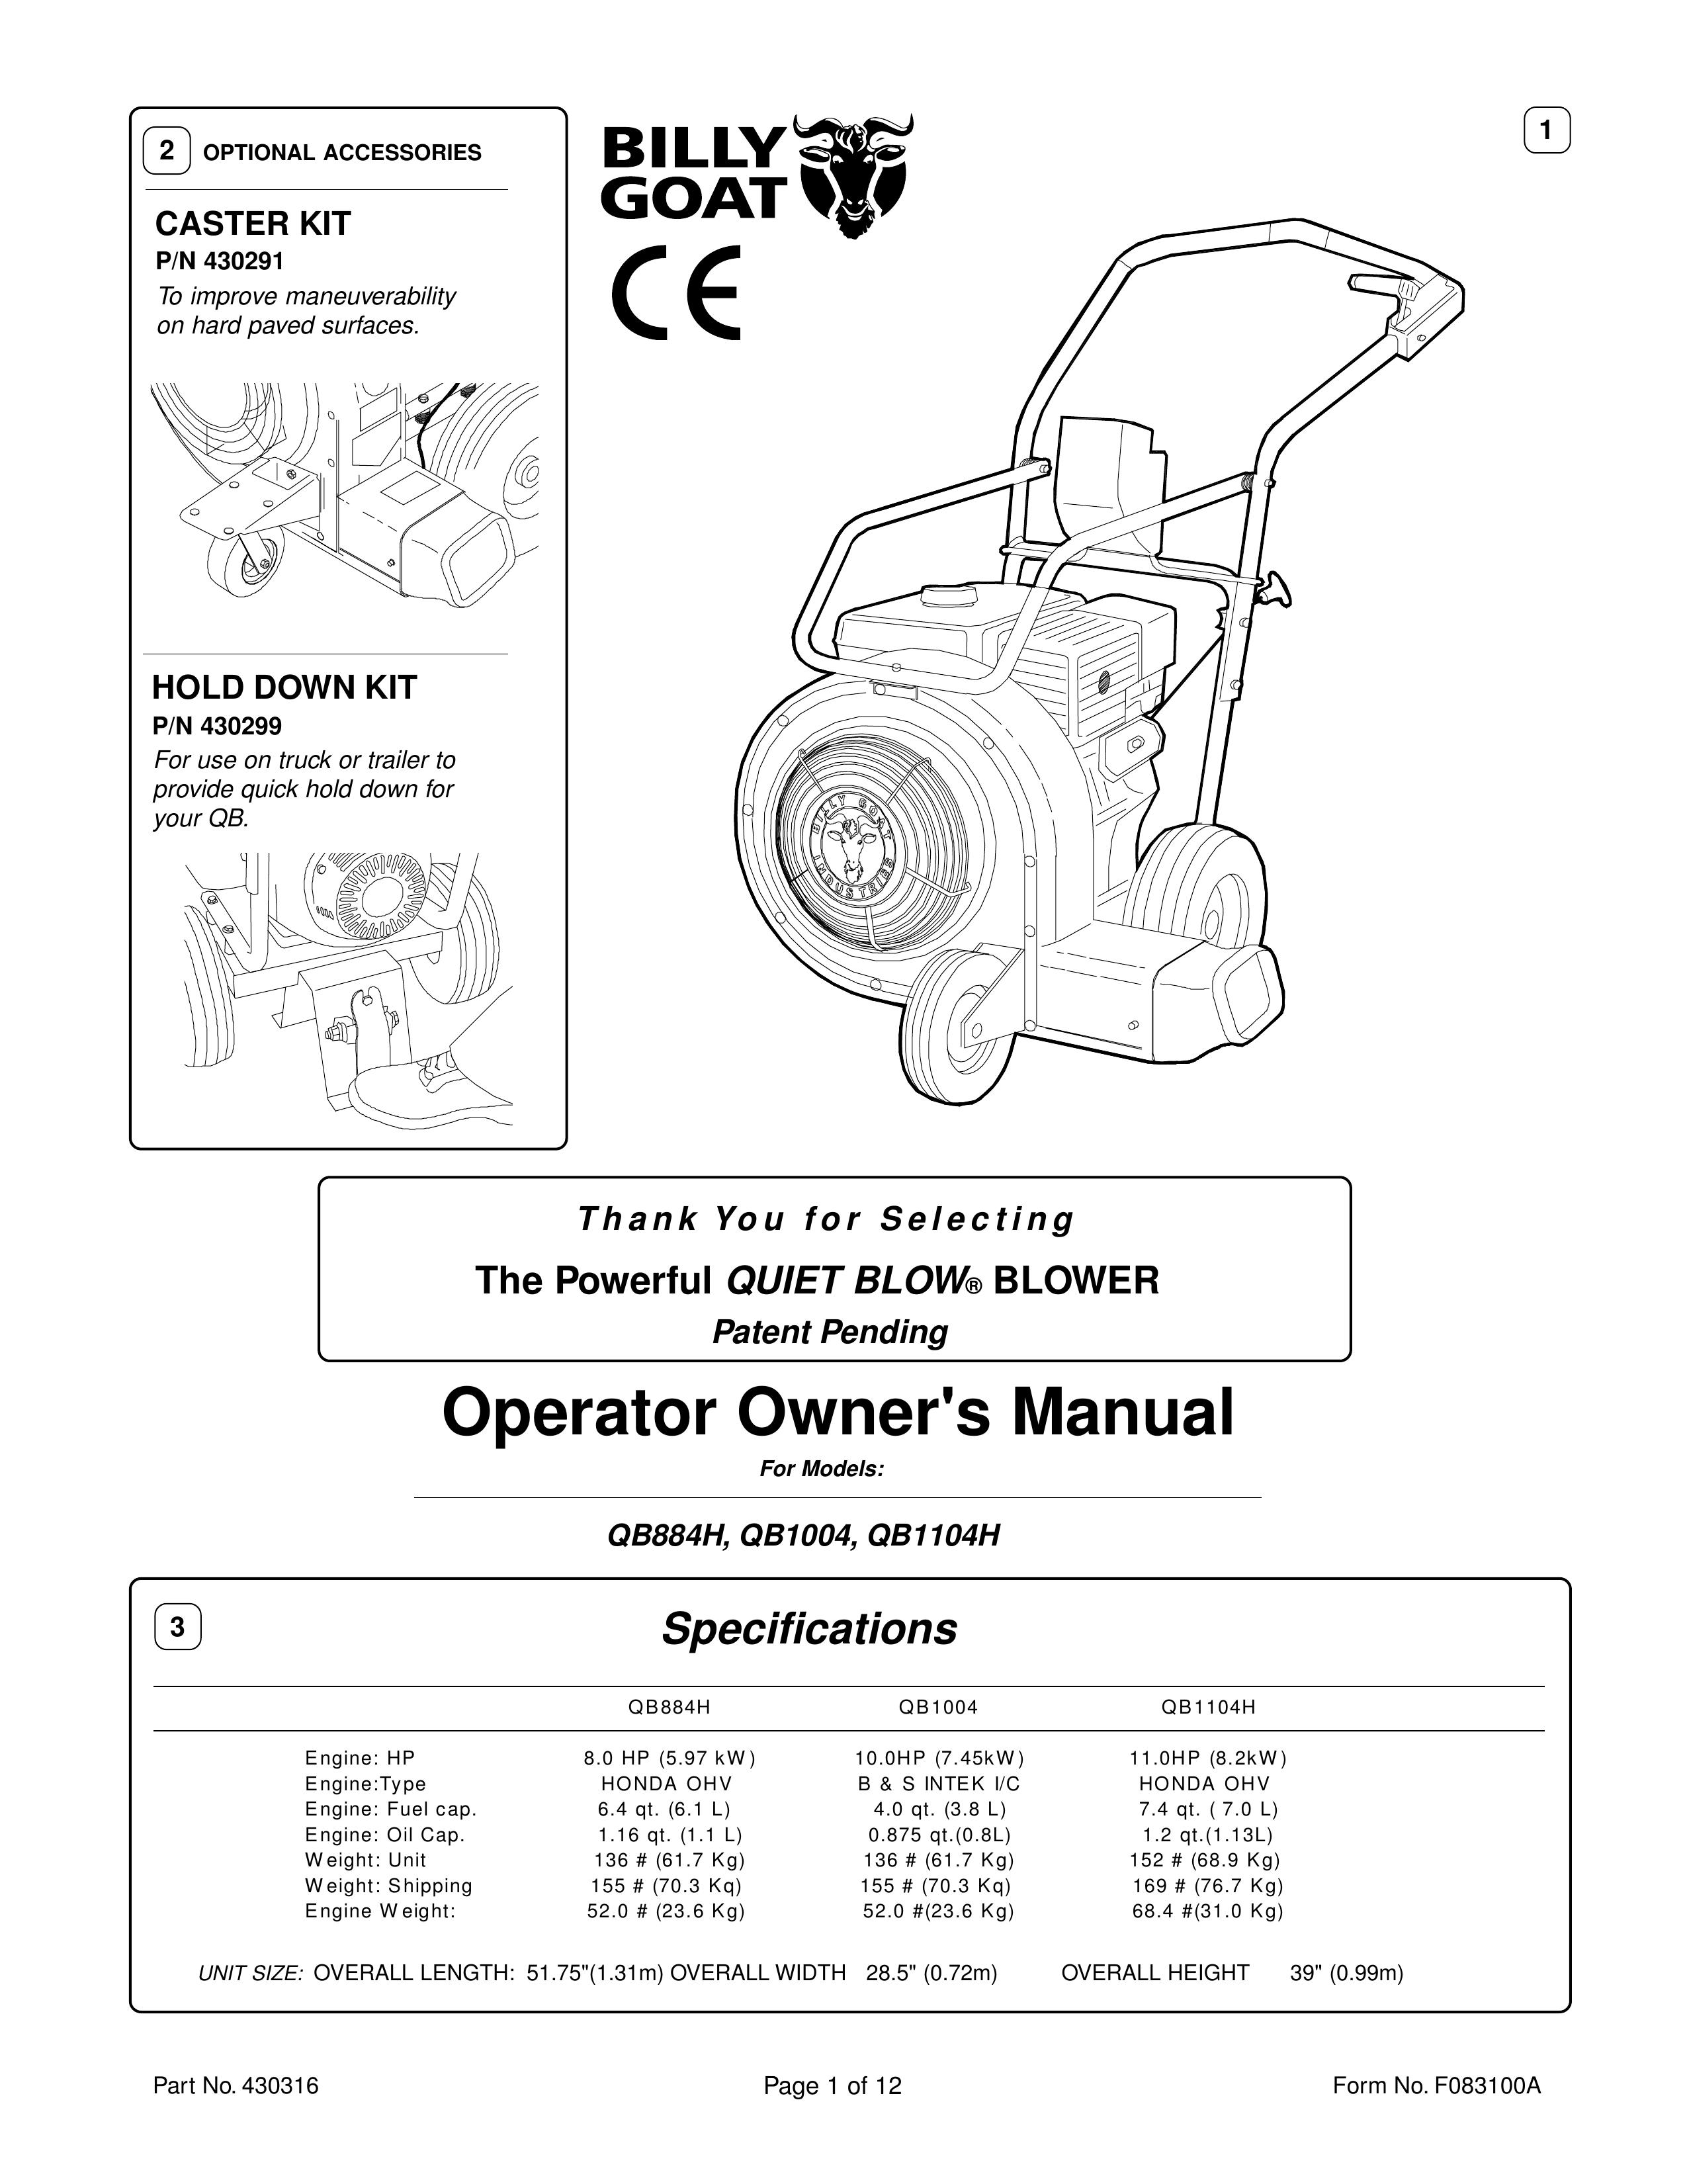 Billy Goat QB884H Blower User Manual